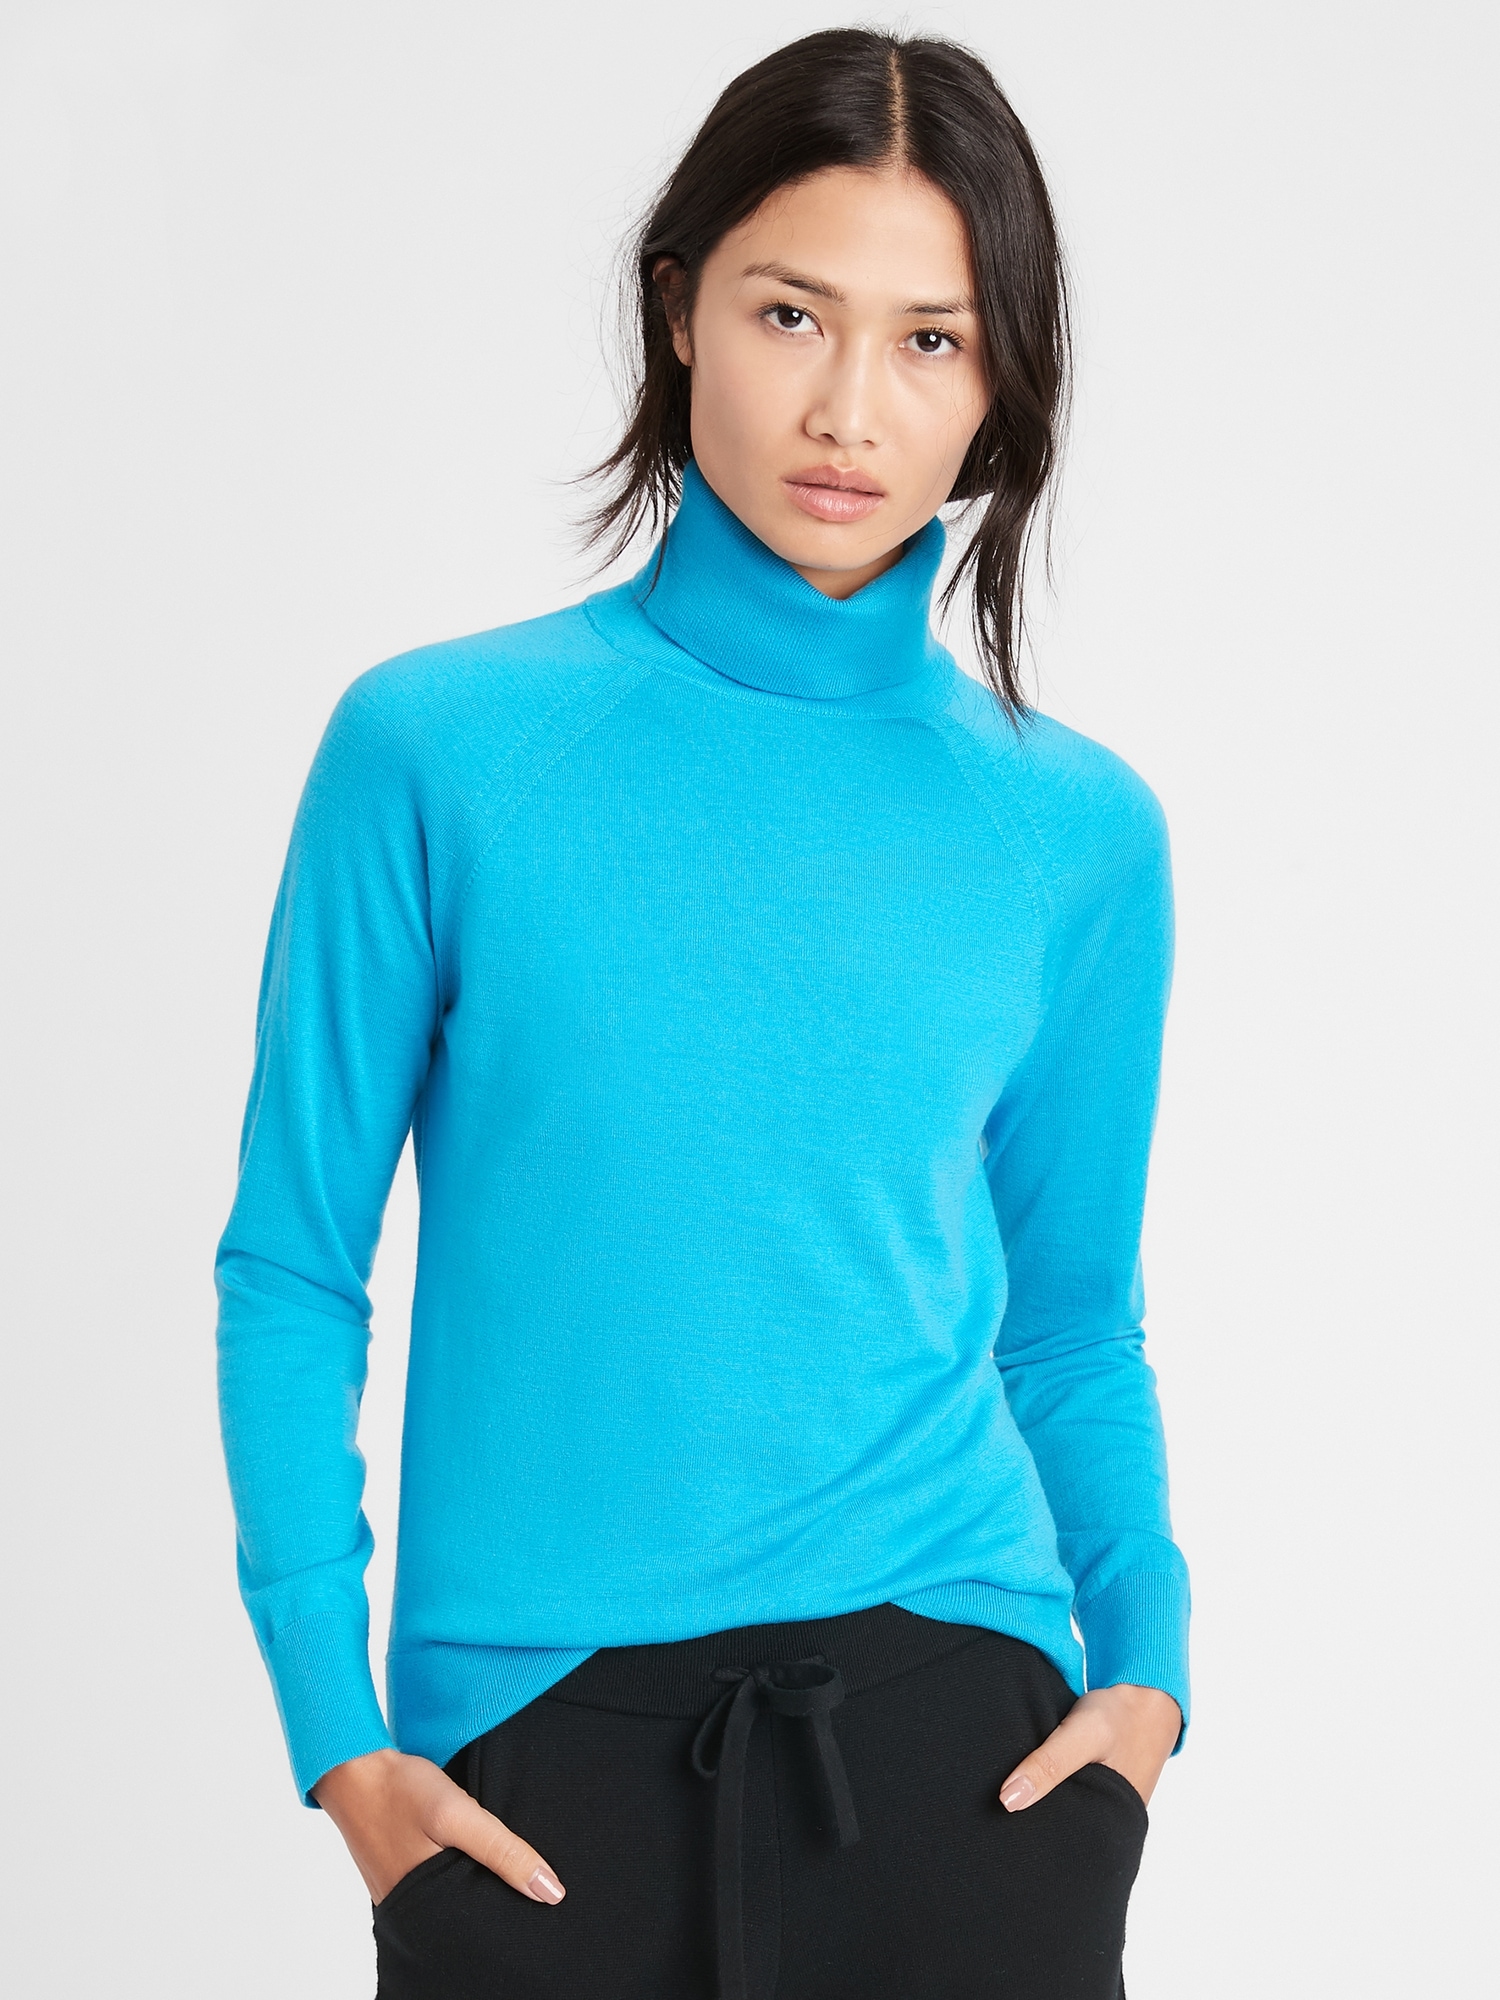 Merino Turtleneck Sweater in Responsible Wool